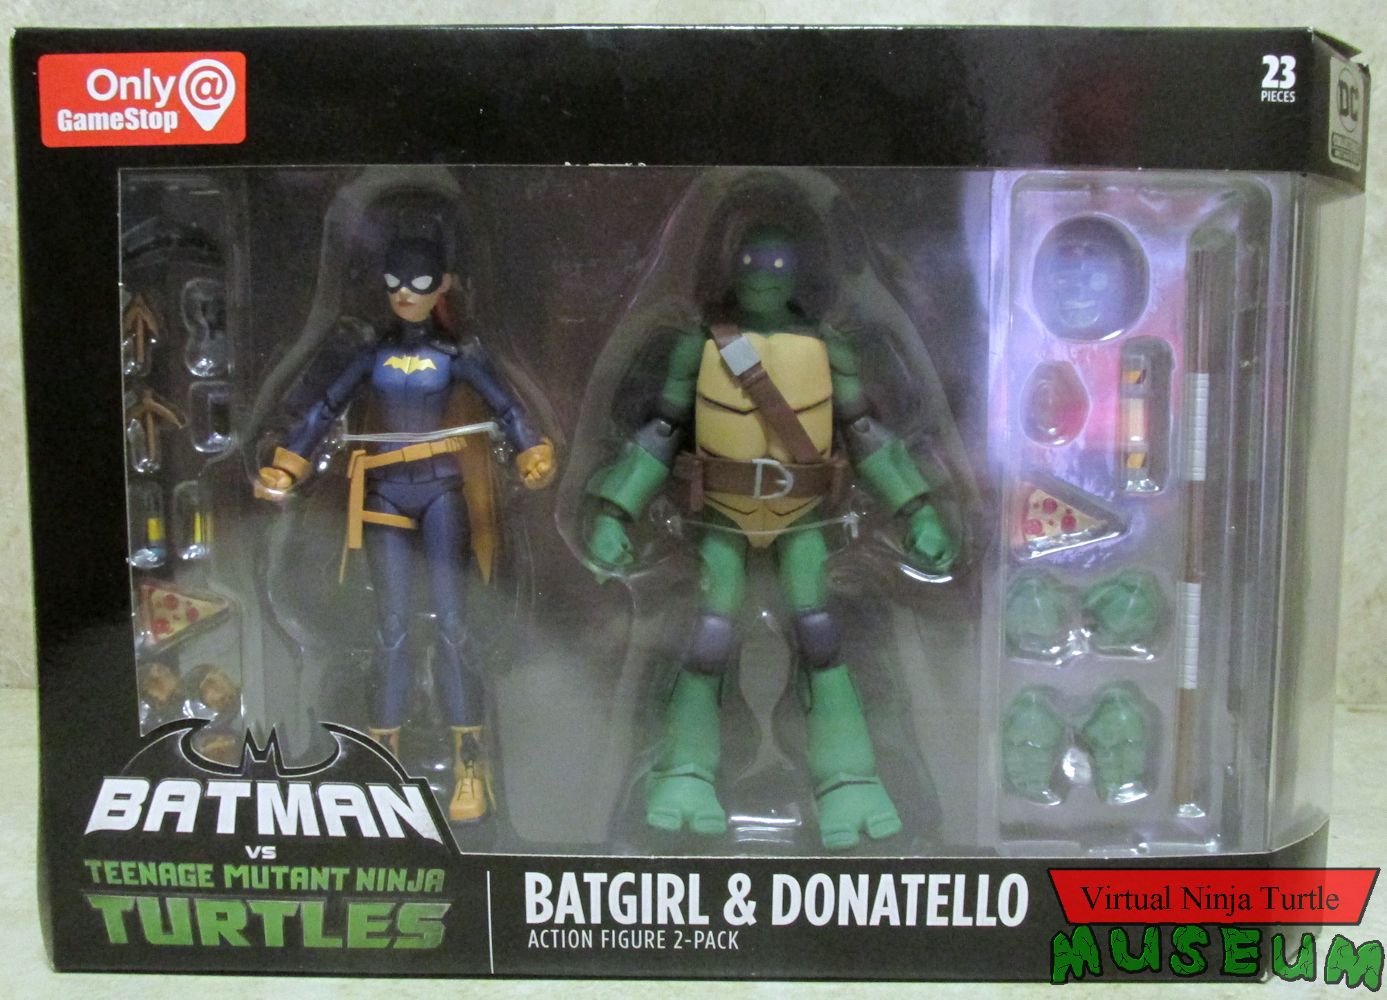 Donatello & Batgirl box front